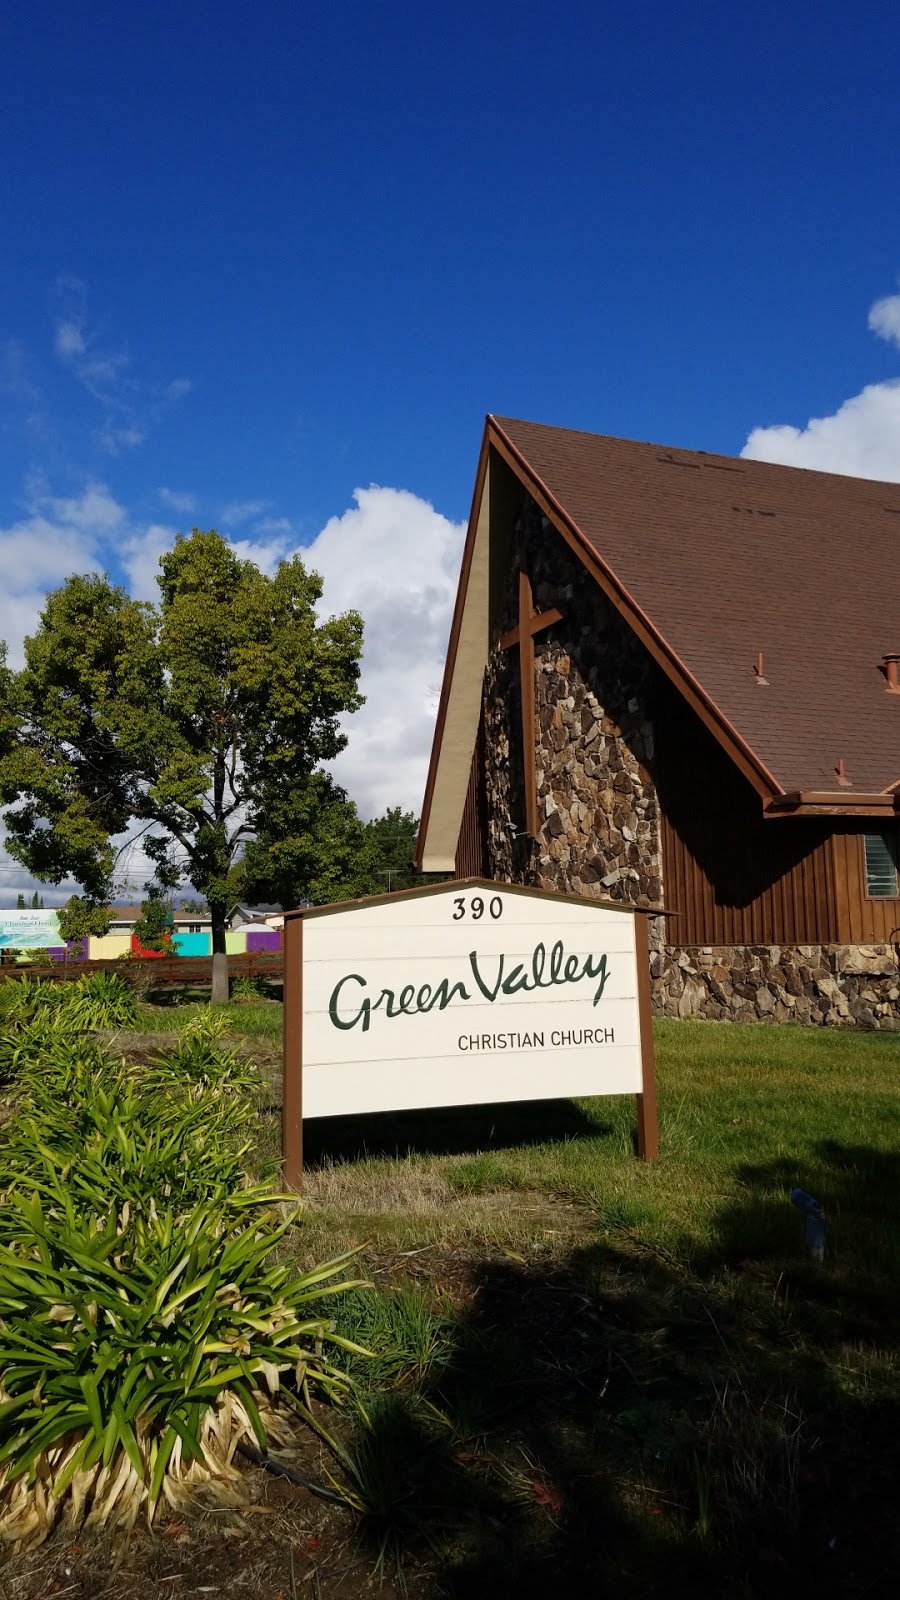 Green Valley Christian Church | Photo 2 of 2 | Address: 390 N Ridge Vista Ave, San Jose, CA 95127, USA | Phone: (408) 251-0821